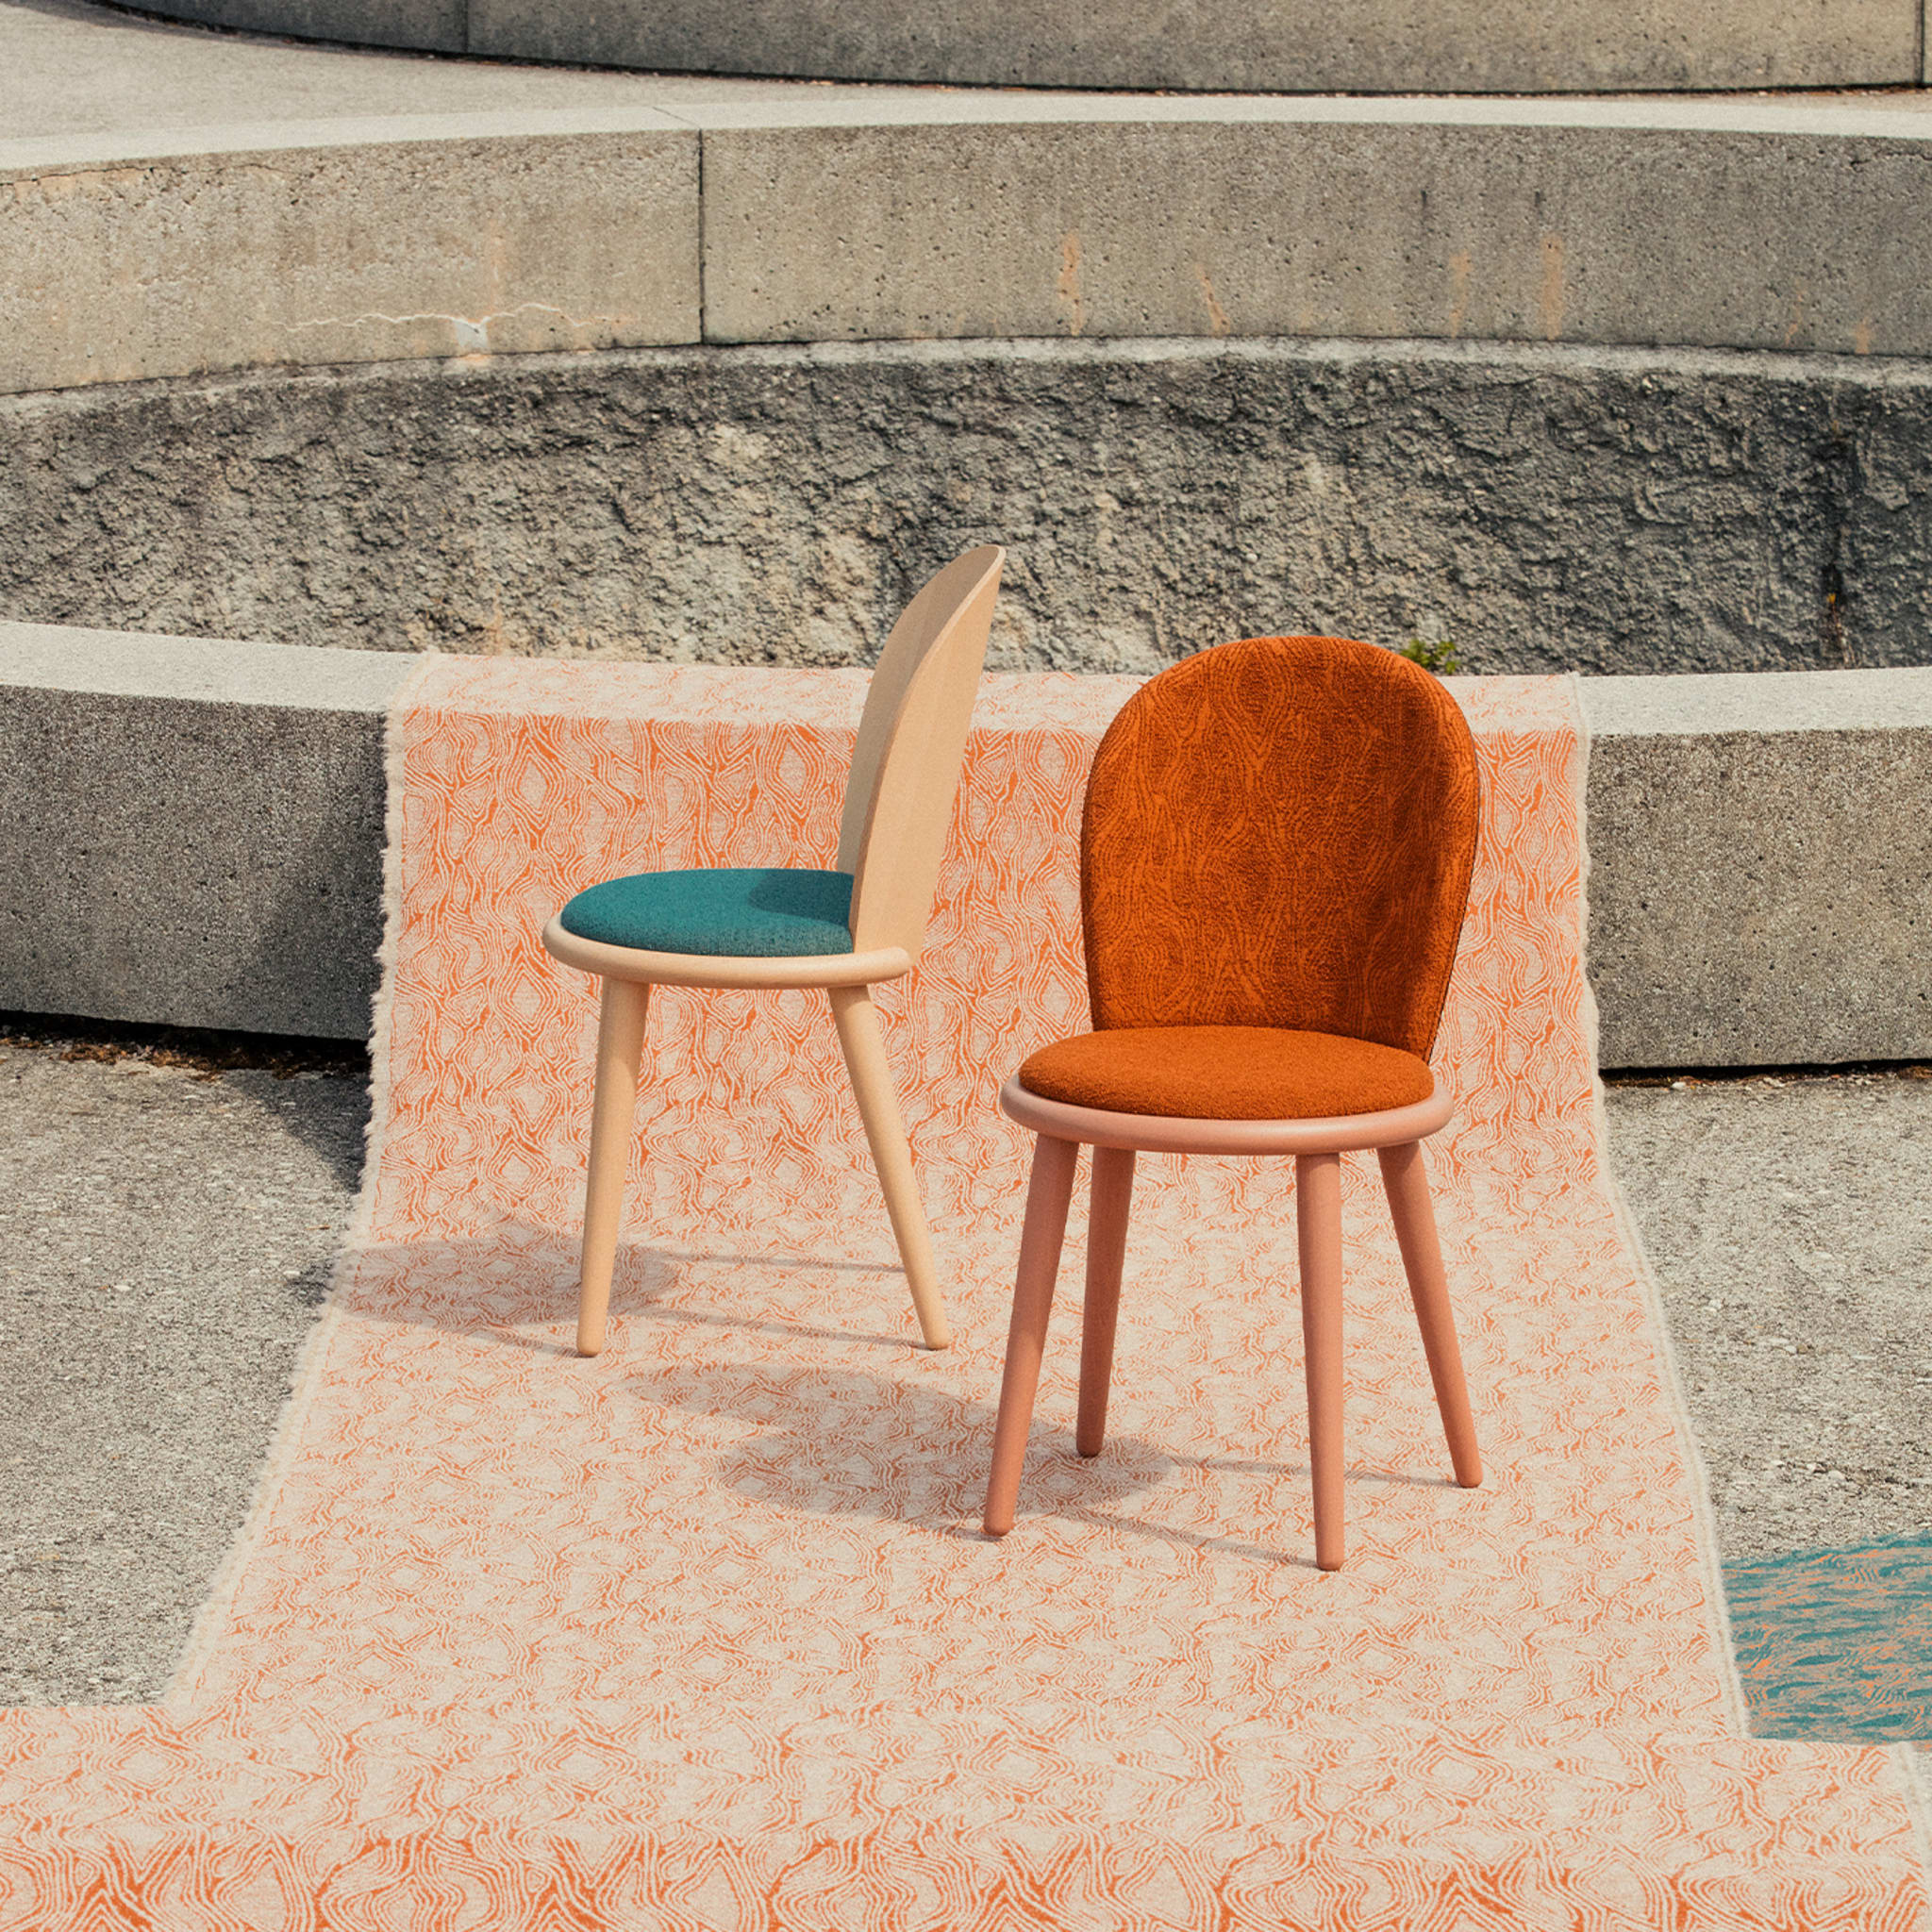 Veretta 921 Orange Chair by Cristina Celestino - Alternative view 3